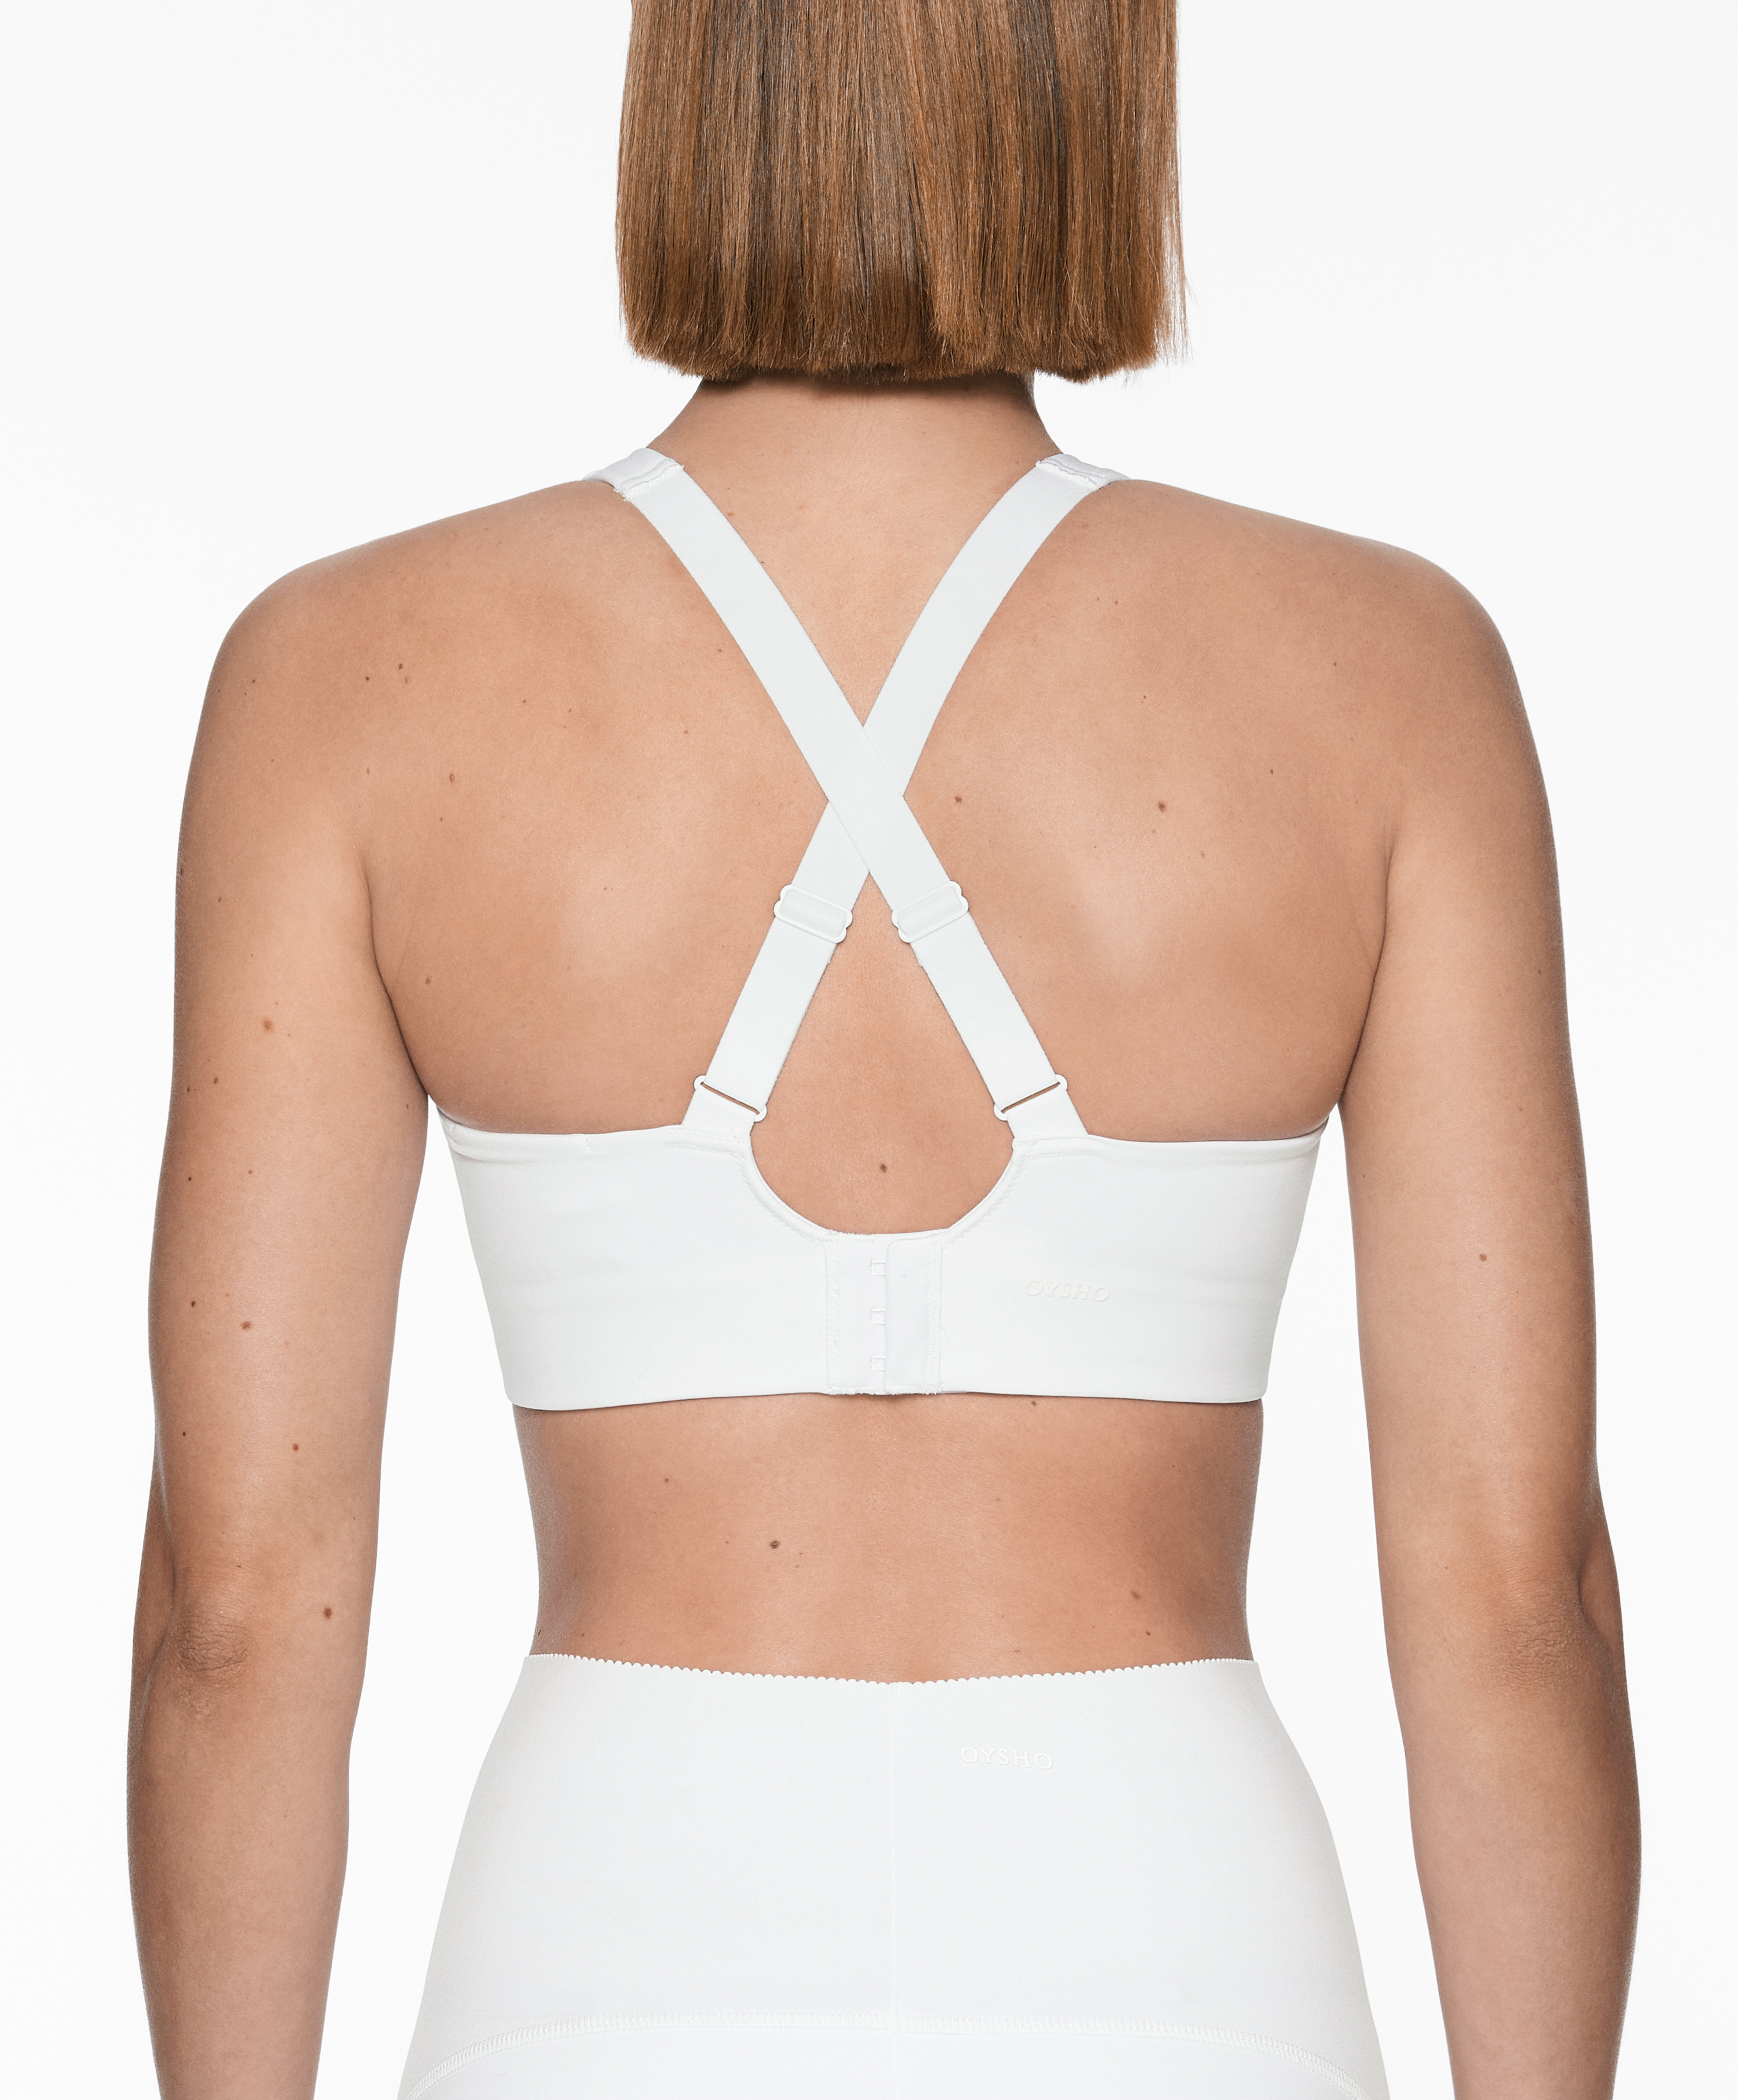 Mesh sports bra - Sport bras - By products - OYSHO SPORT